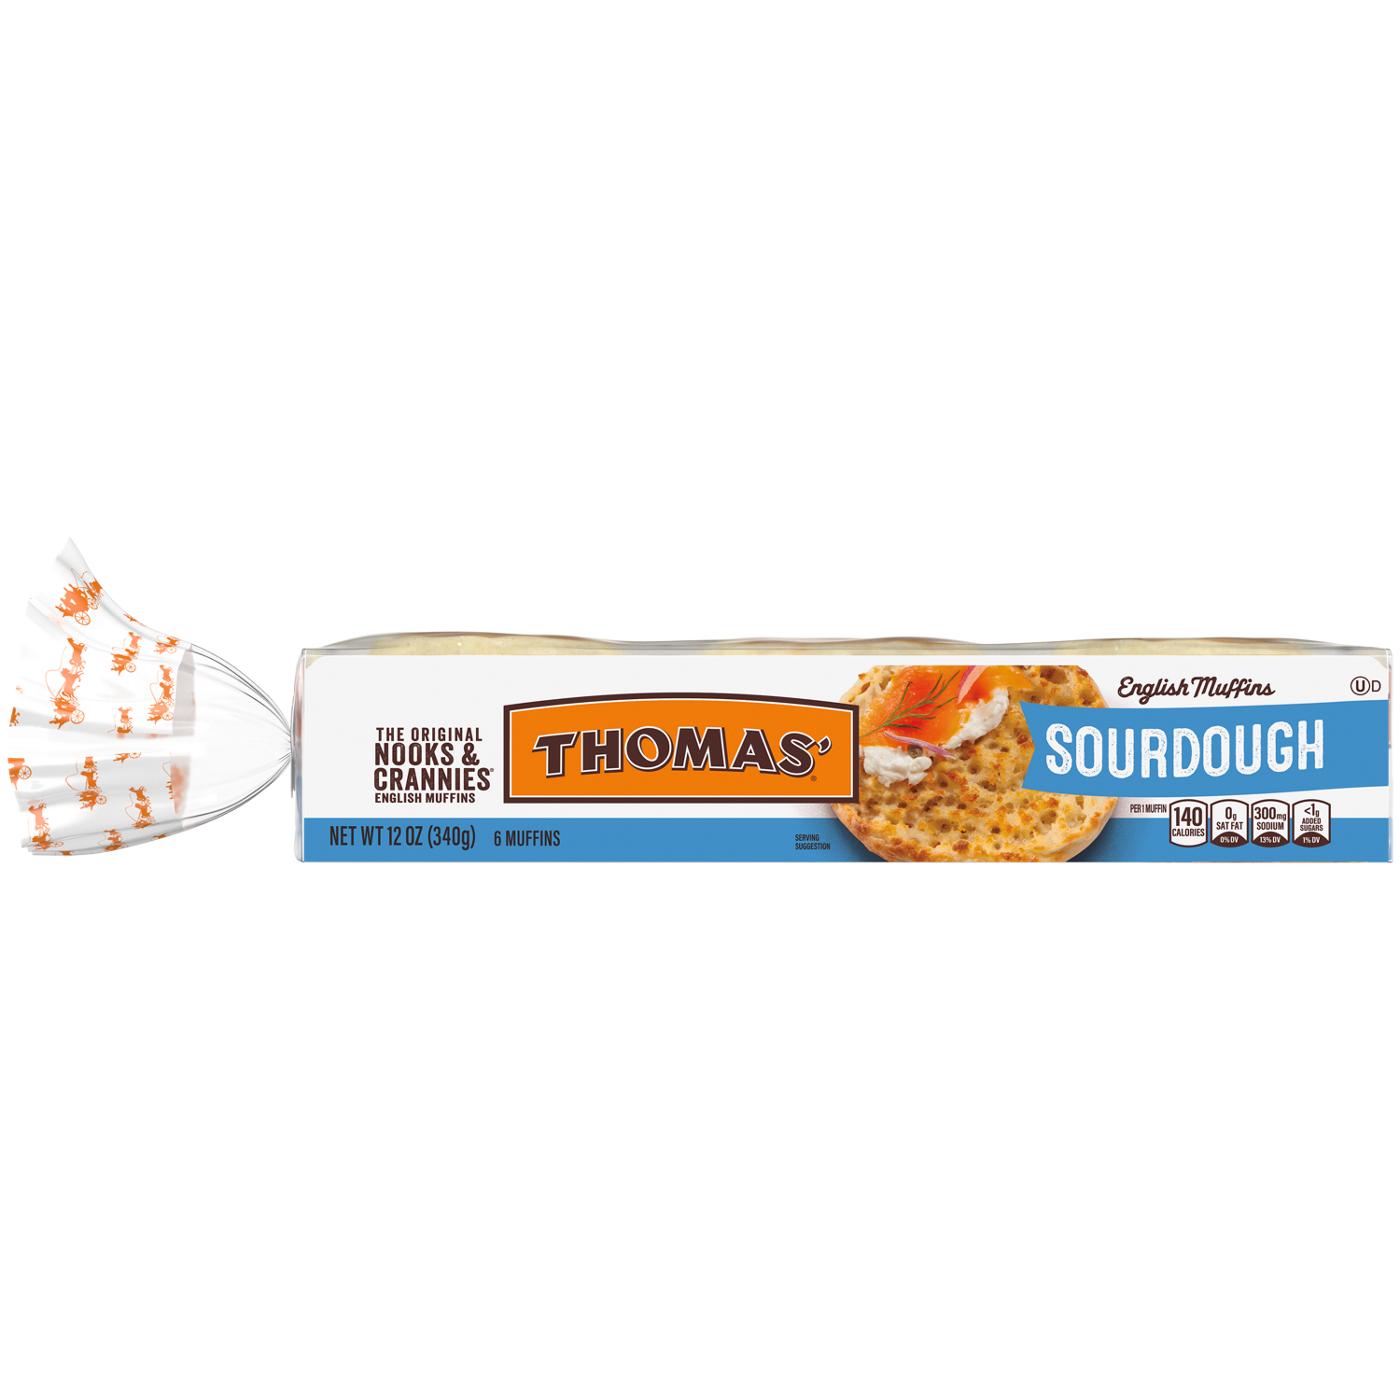 Thomas' Sourdough English Muffins; image 1 of 4